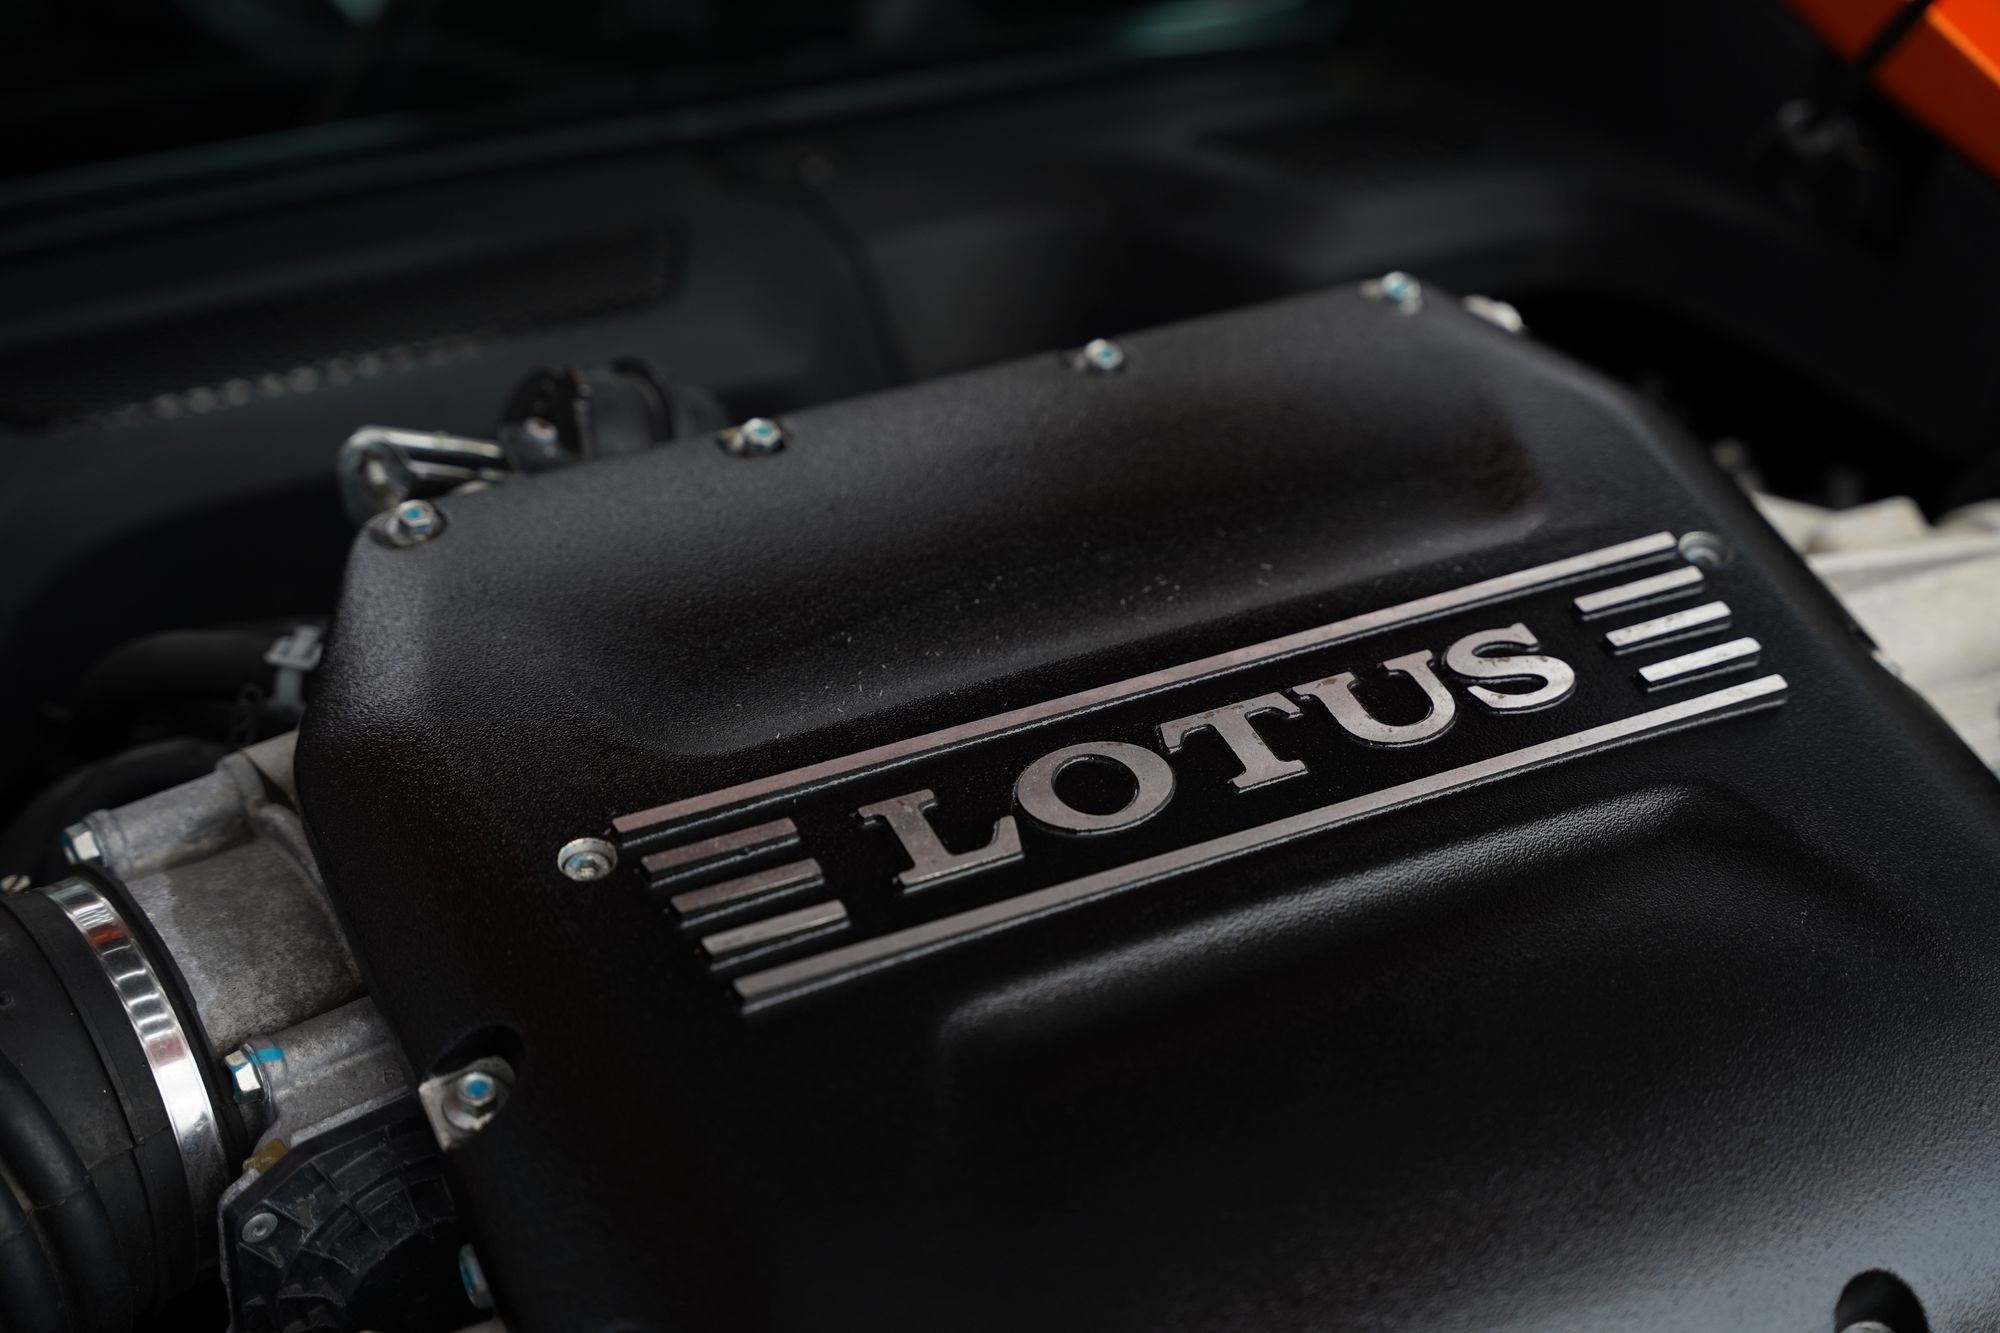 2021 Lotus Exige Sport 390 'Final Edition' Press Car